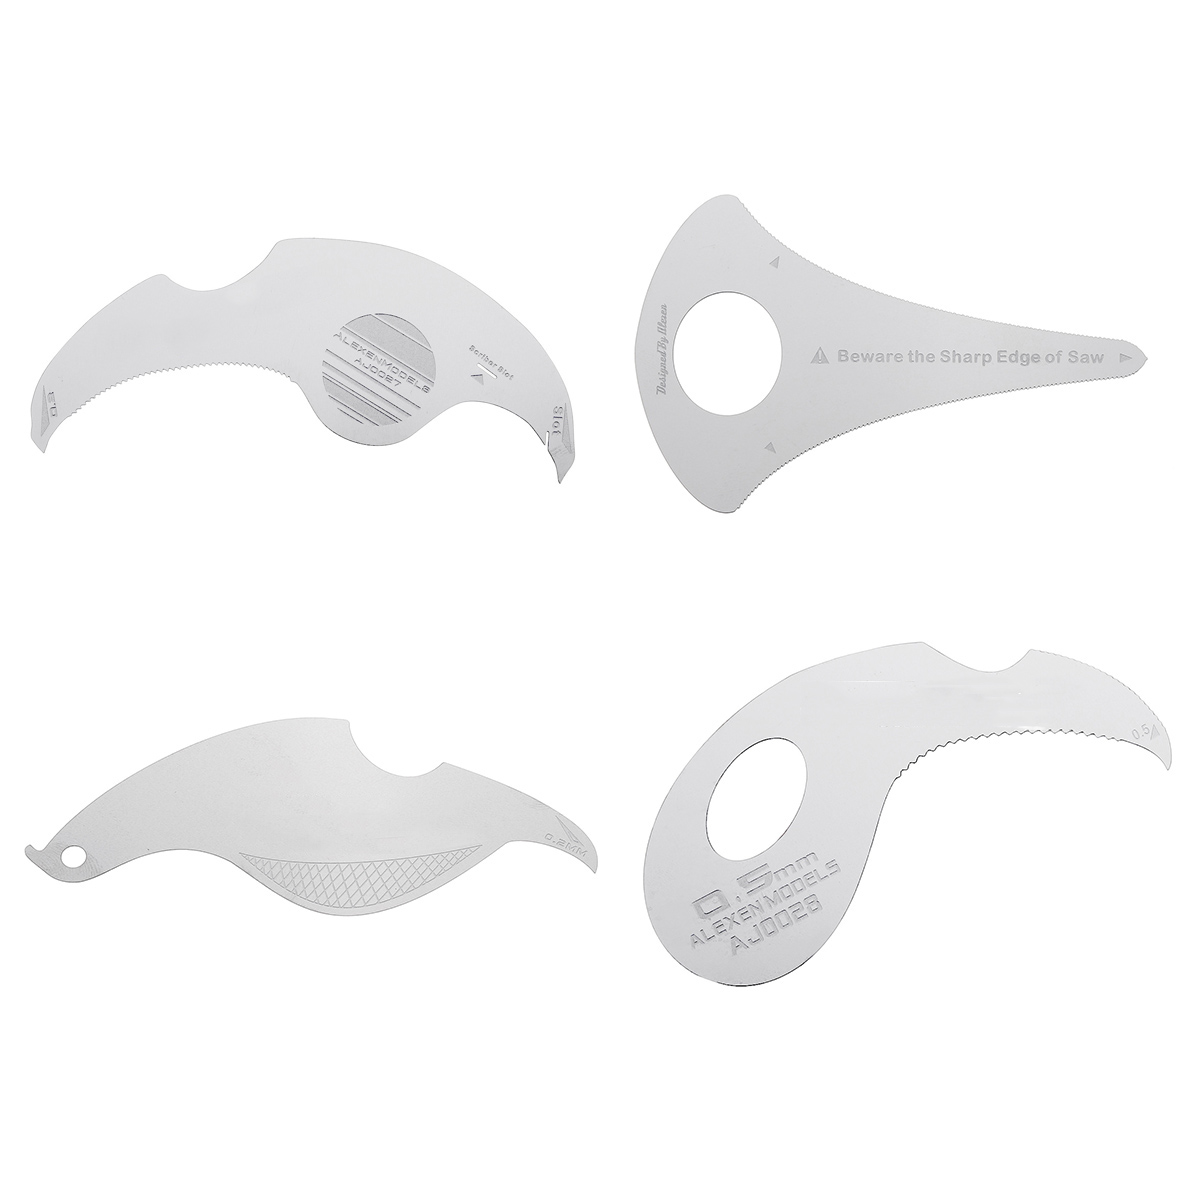 Mini-Handy-Craft-Metal-Saws-Mini-Saw-Razor-Saw-Tools-Modeling-Tool-1674902